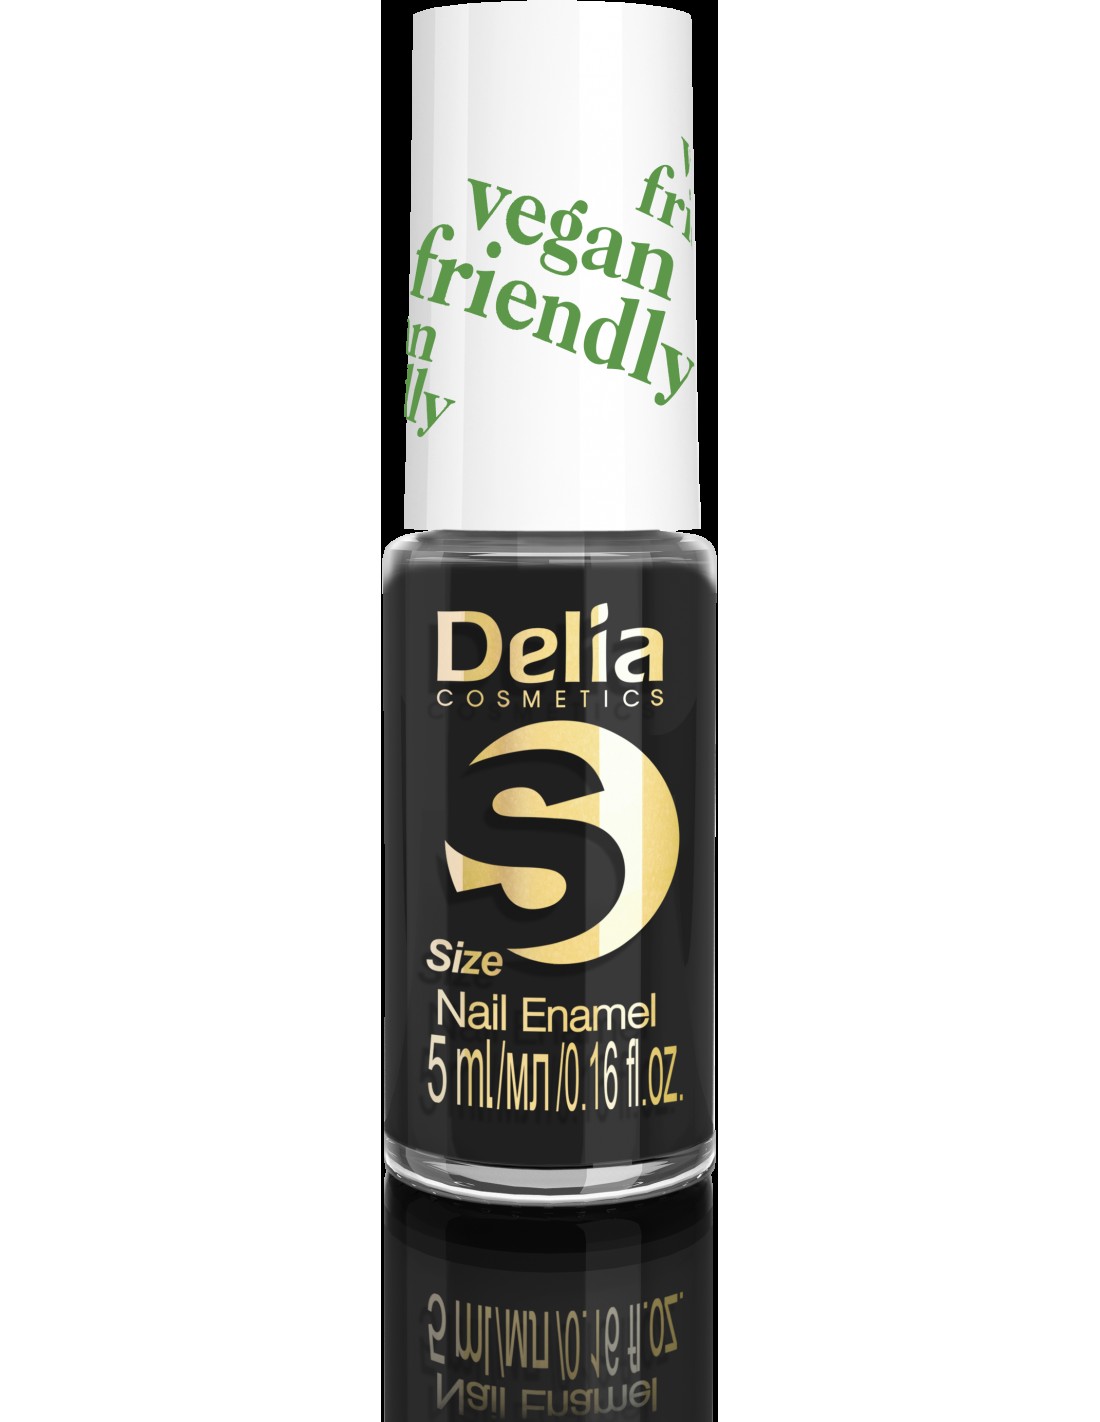 Delia Cosmetics Vegan Friendly Emalia do paznokci Size S nr 231 Black Orchid  5ml